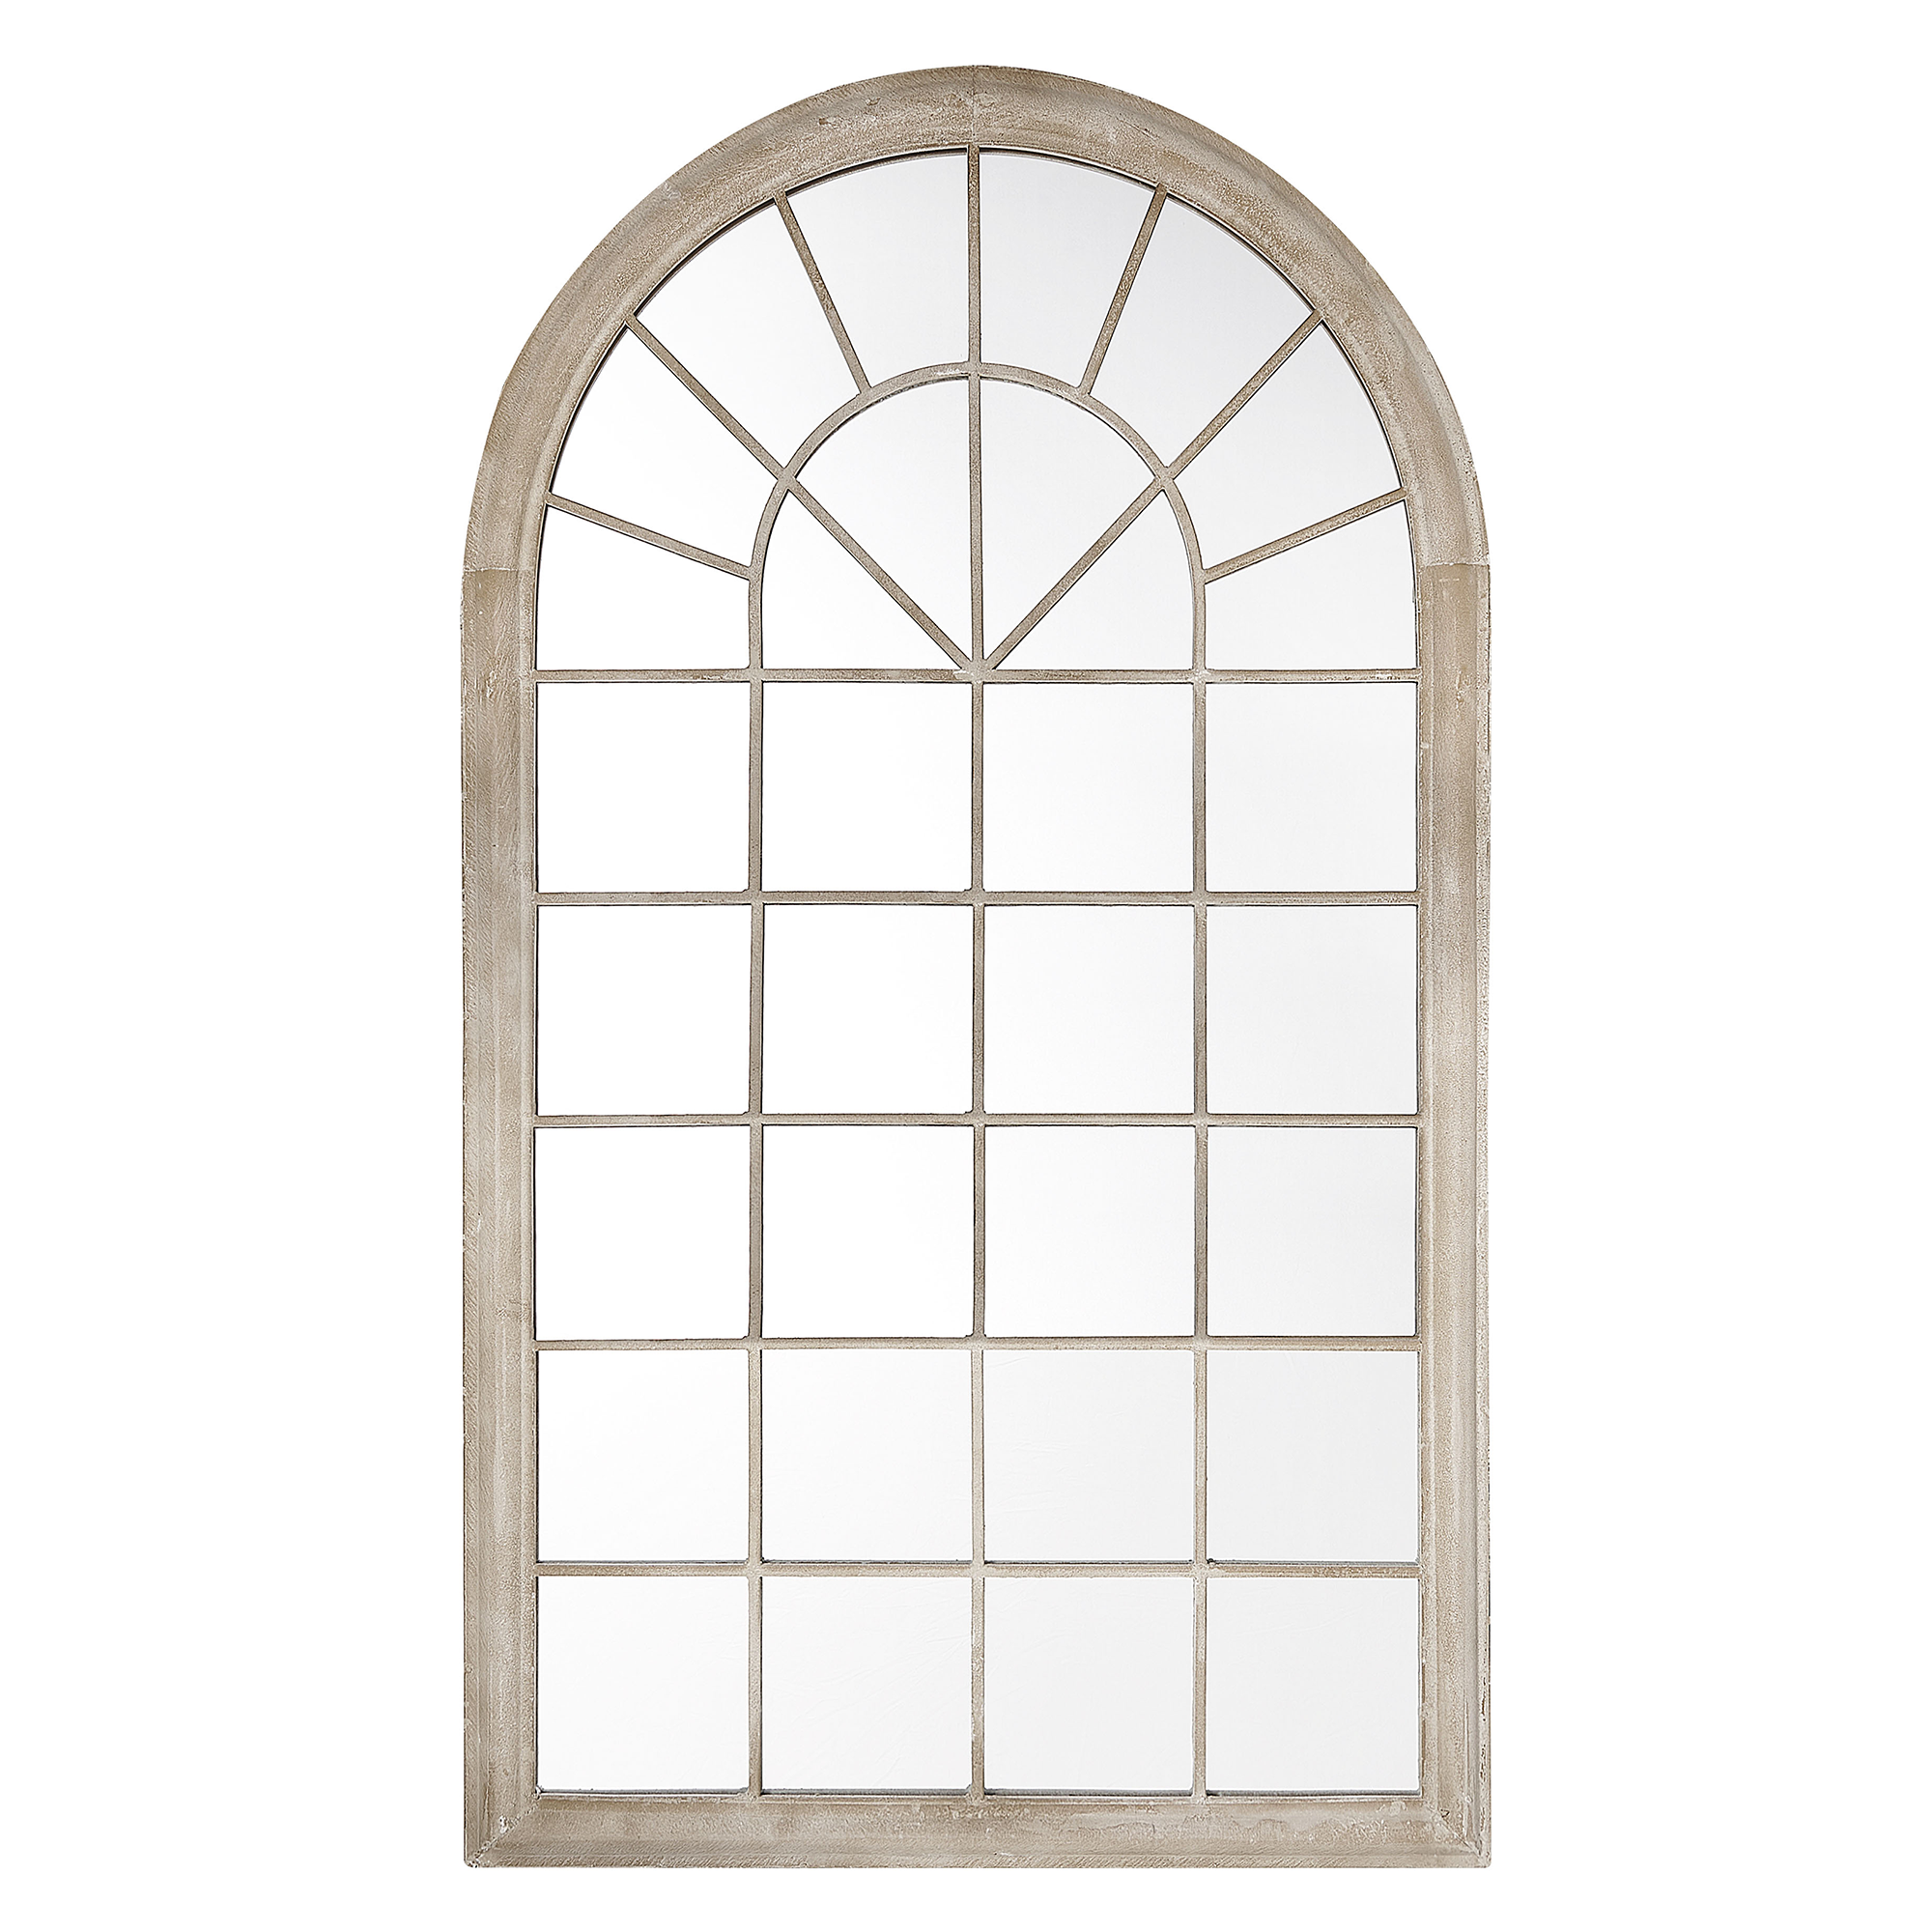 Beliani Wall Mirror Beige Metal Frame 76 x 130 cm Vintage Arched Window Wall Decor Weathered Look